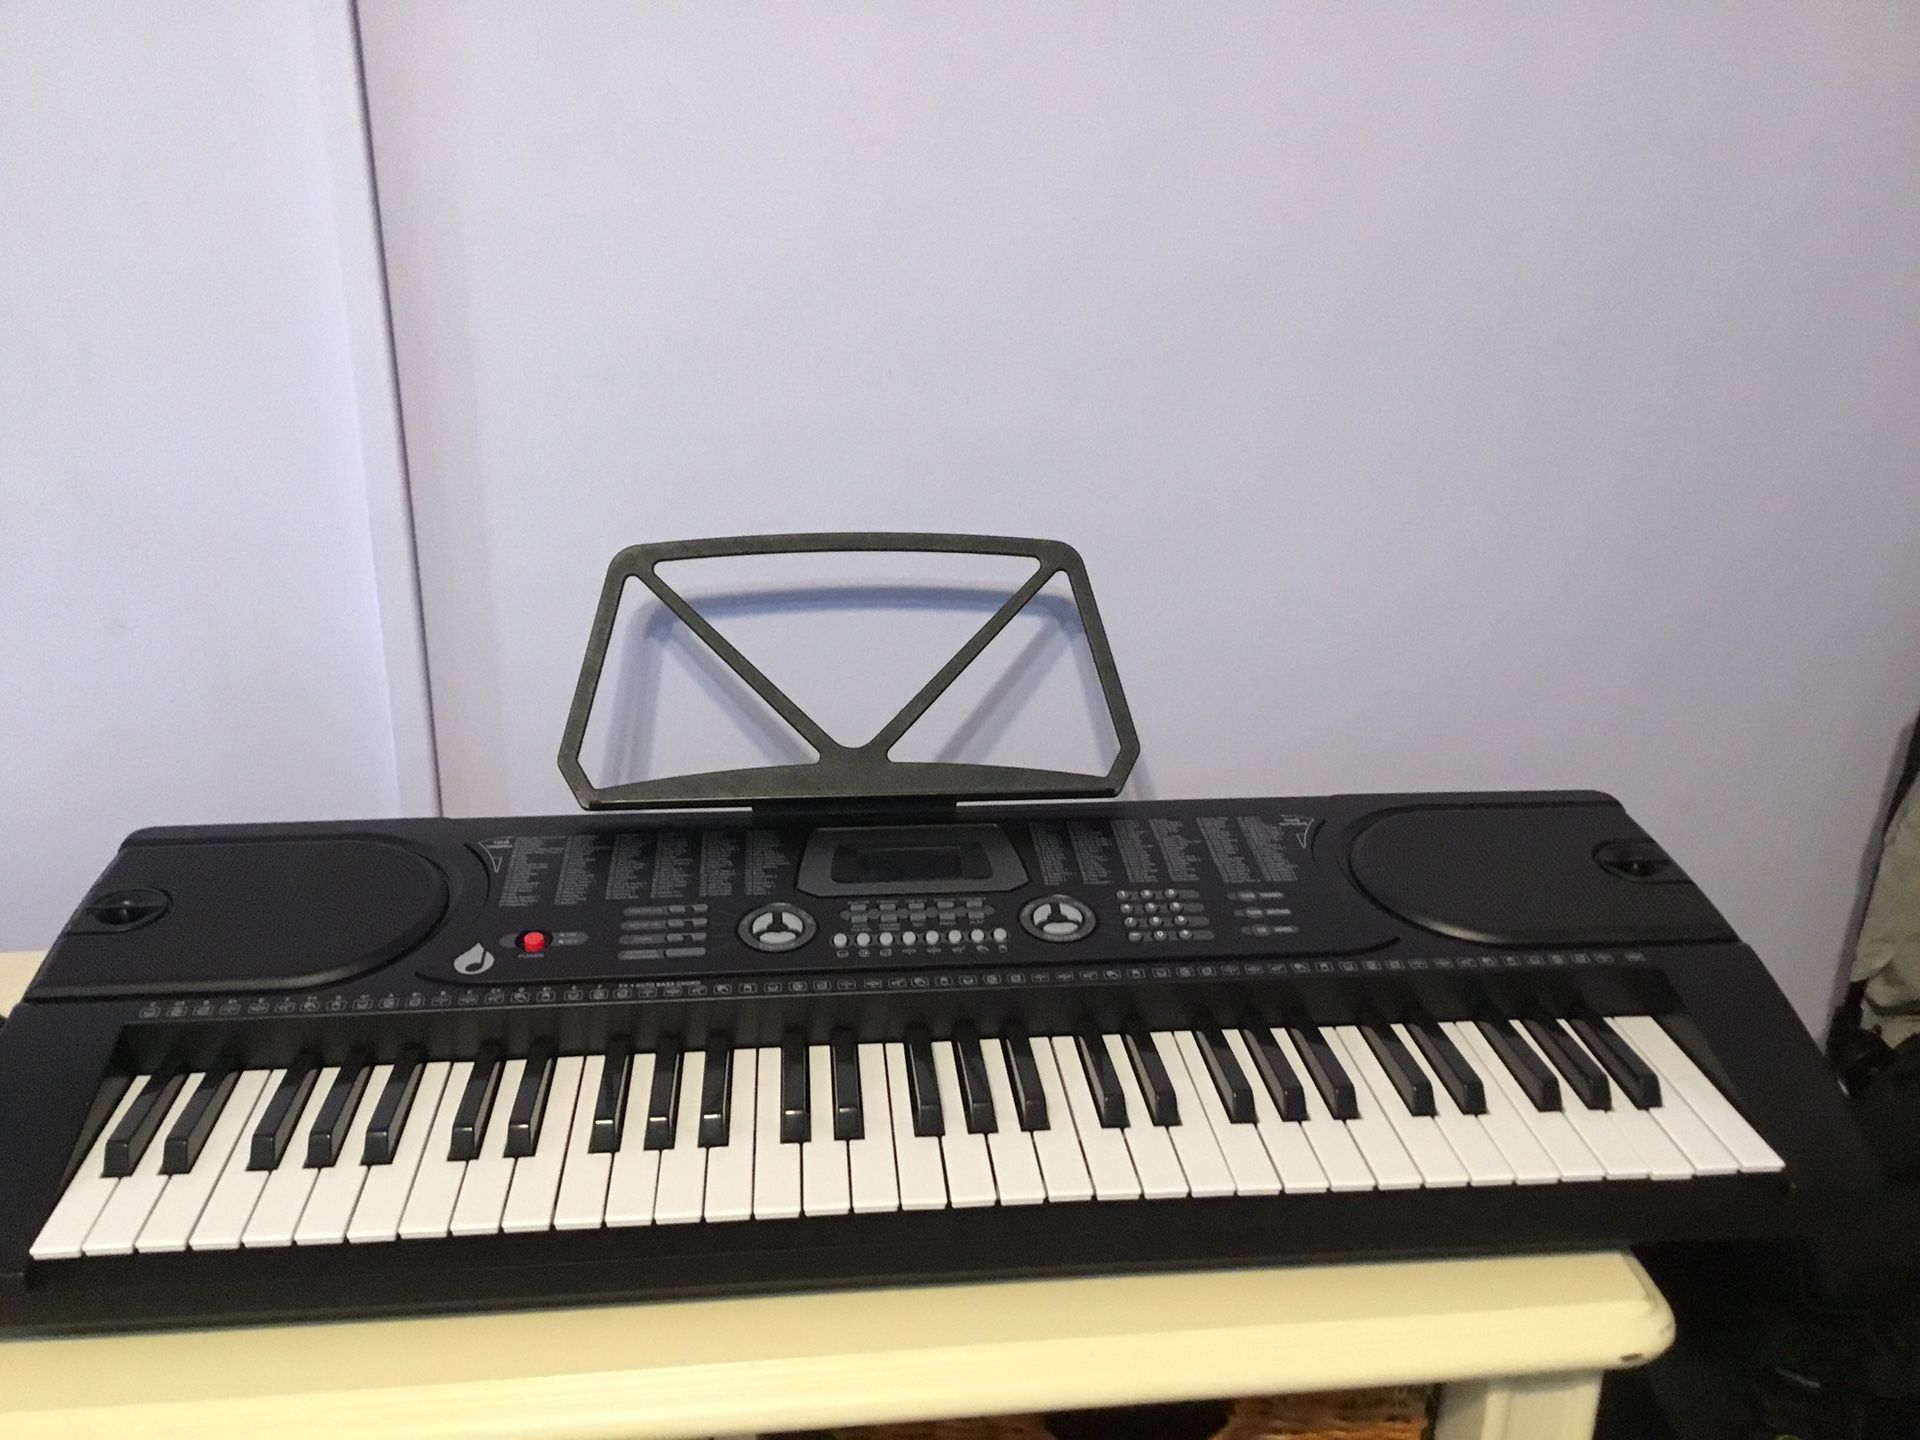 LAGRIMA Electric Piano Keyboard 61 key Keyboard Music Piano Portable Electronic Digital paino with Microphone